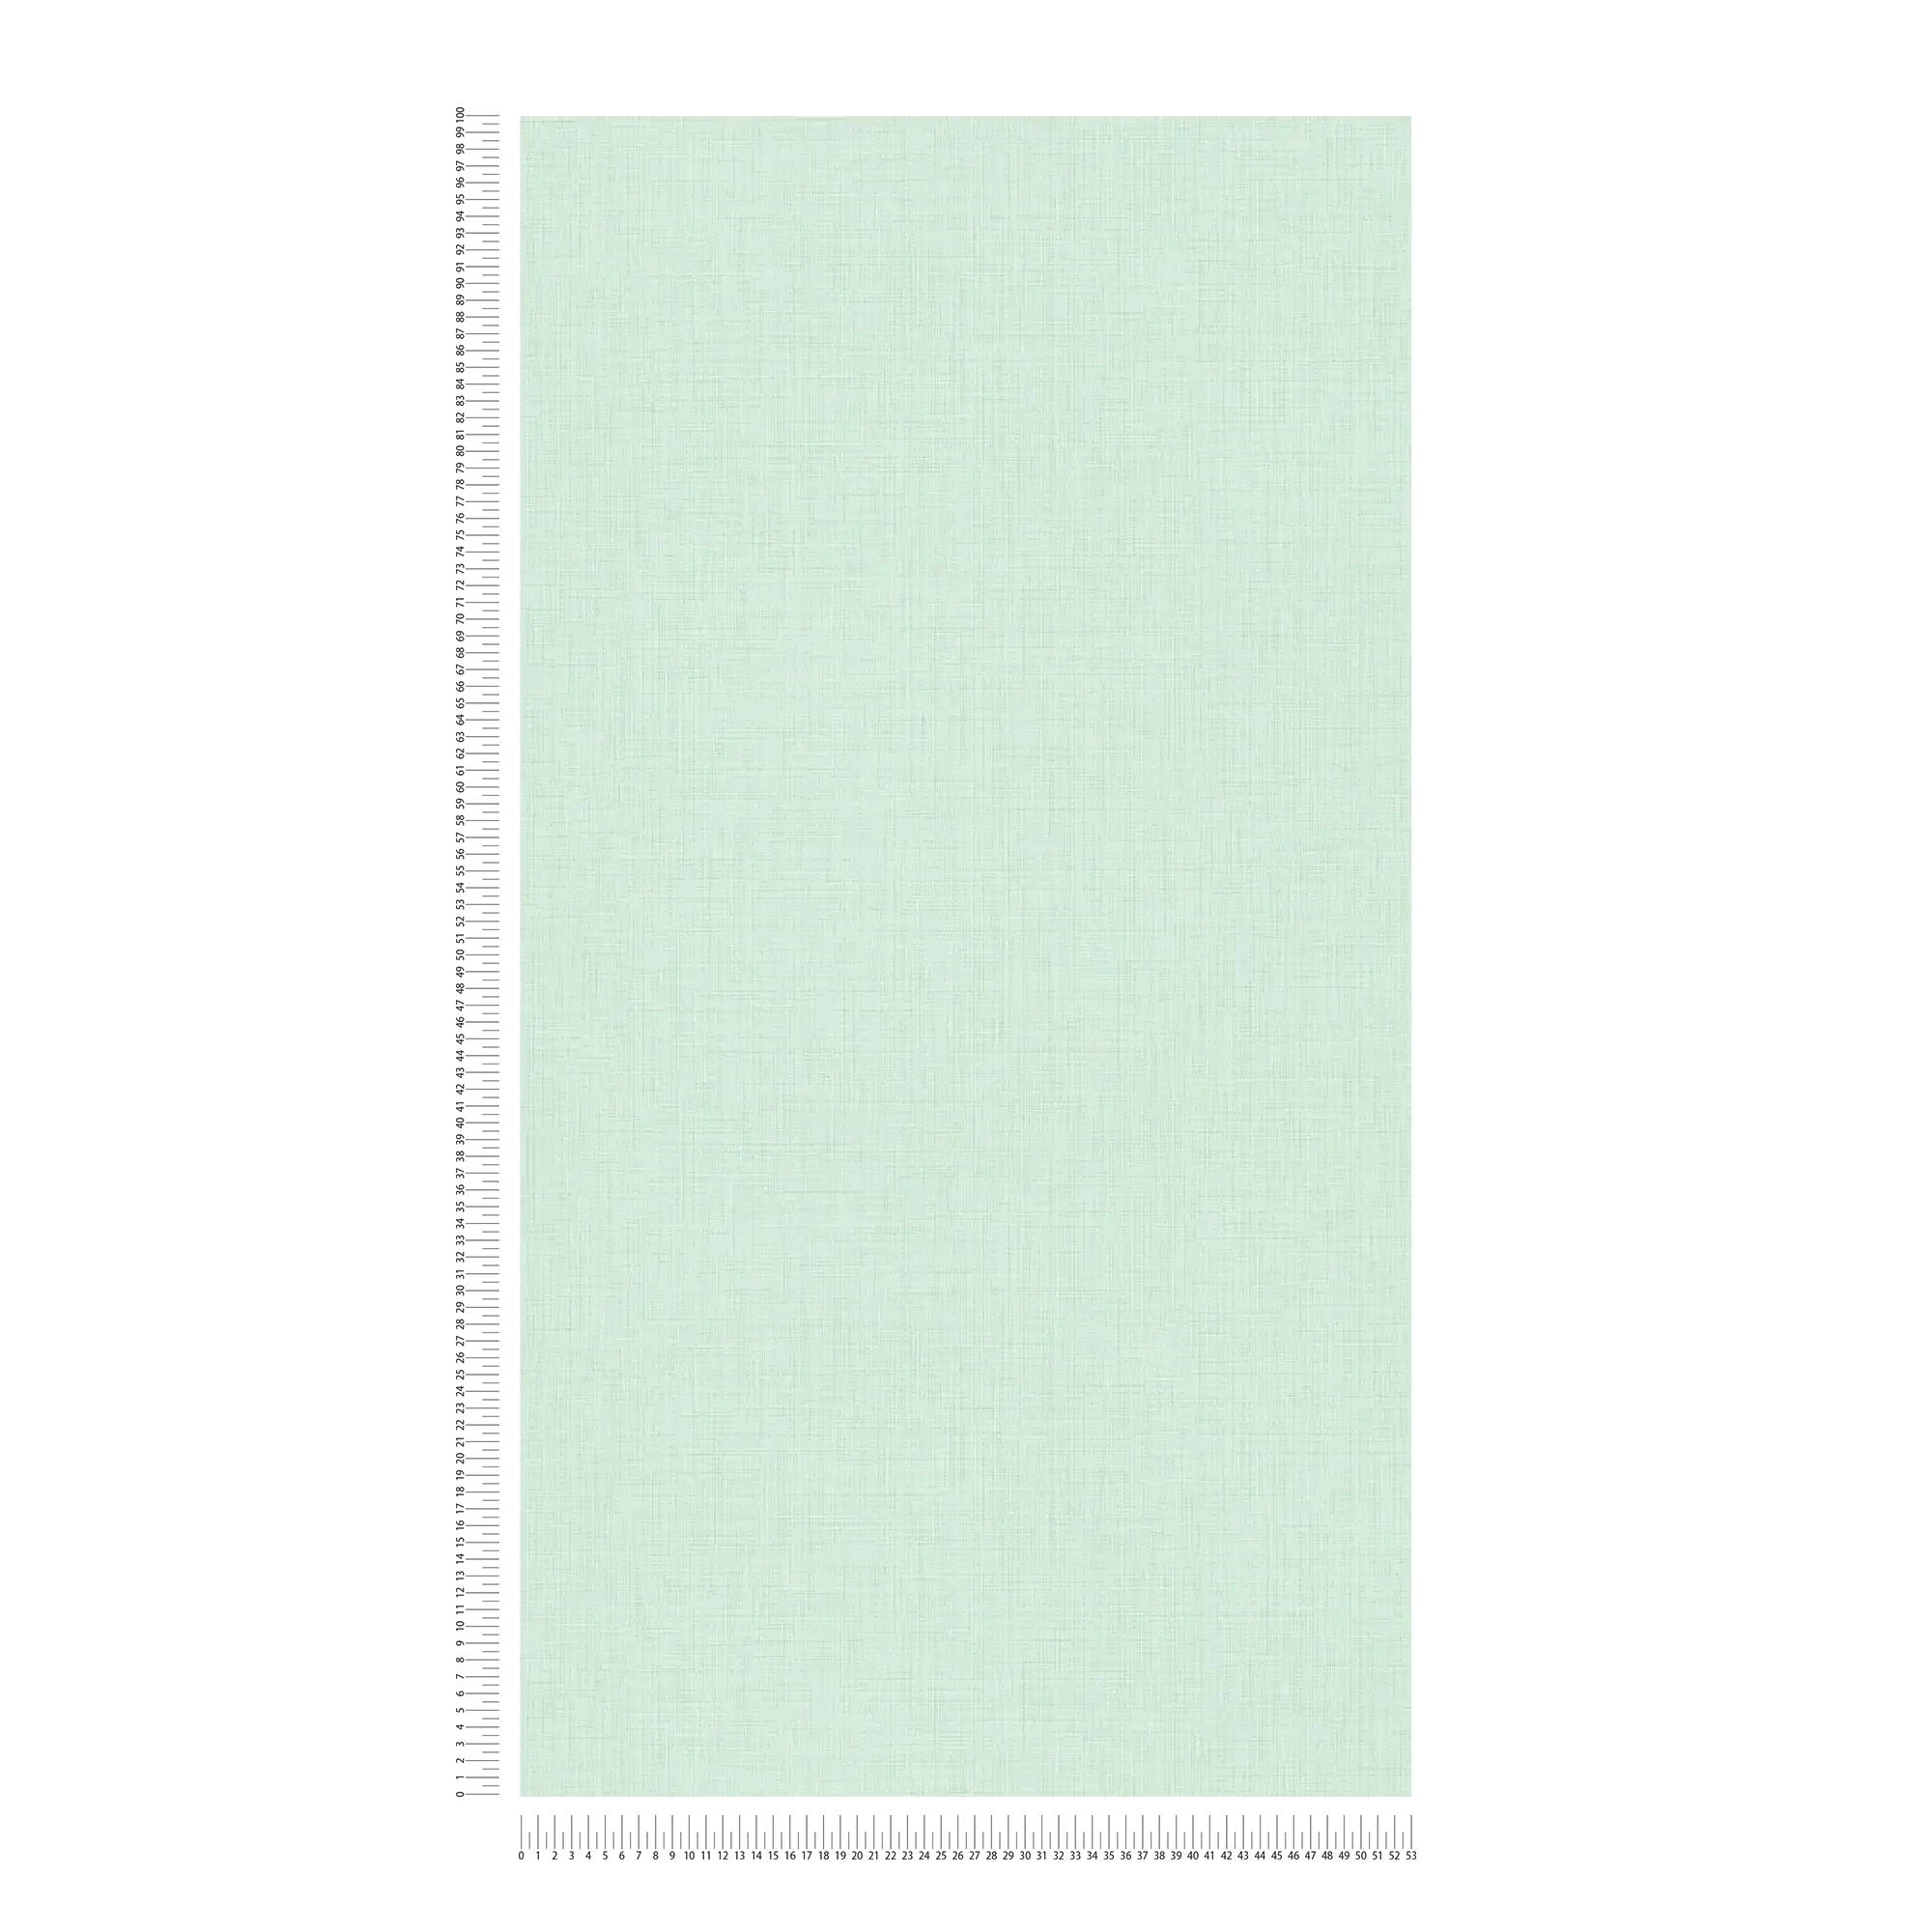             Papier peint aspect lin Lindgrün de MICHALSKY
        